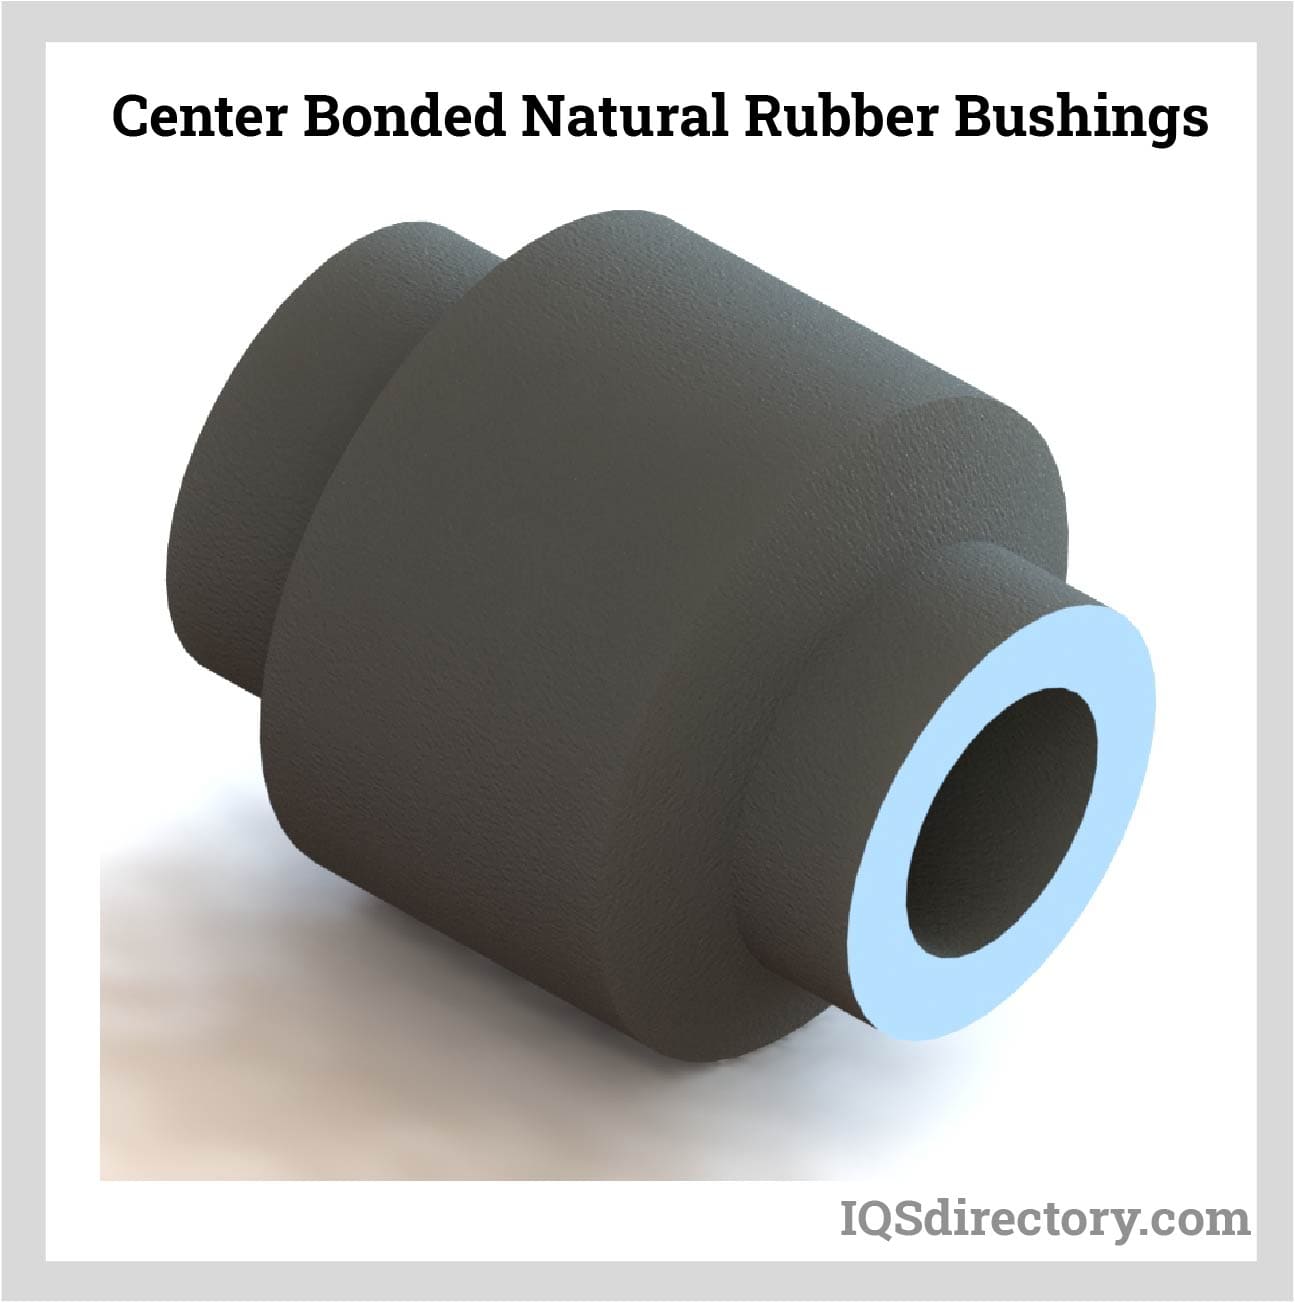 Center Bonded Natural Rubber Bushings